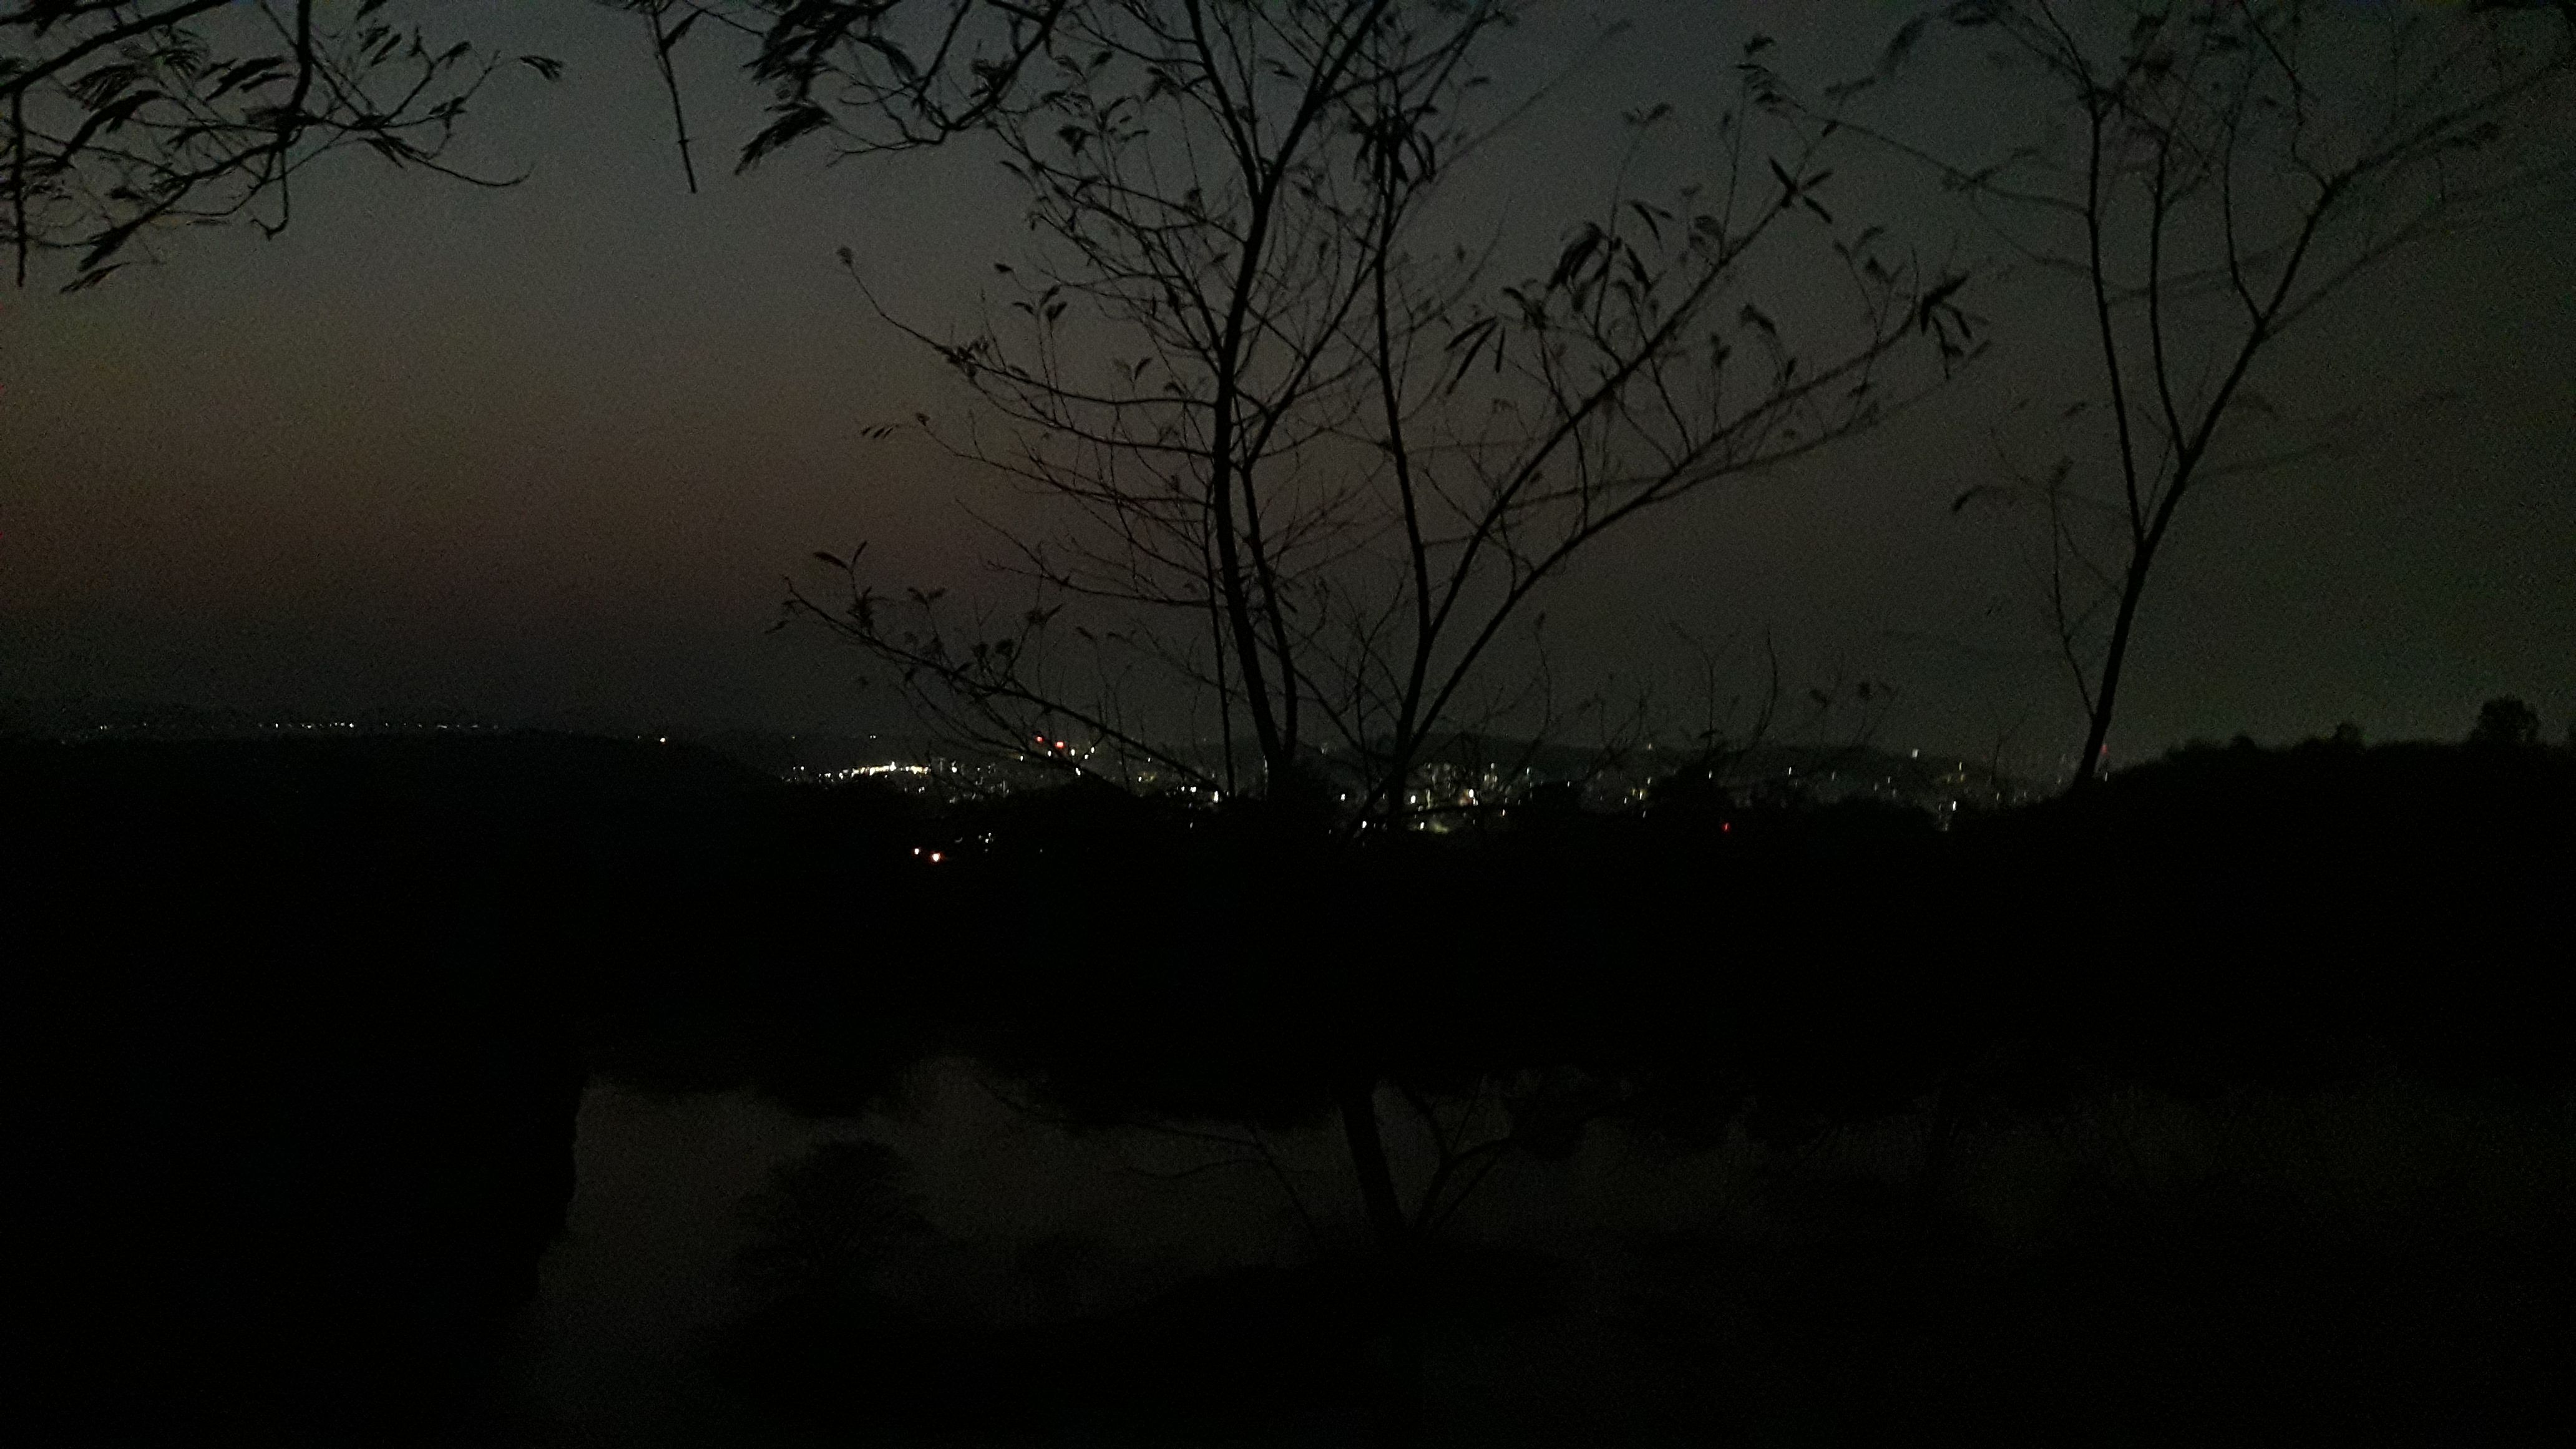 The city at dusk, reflection